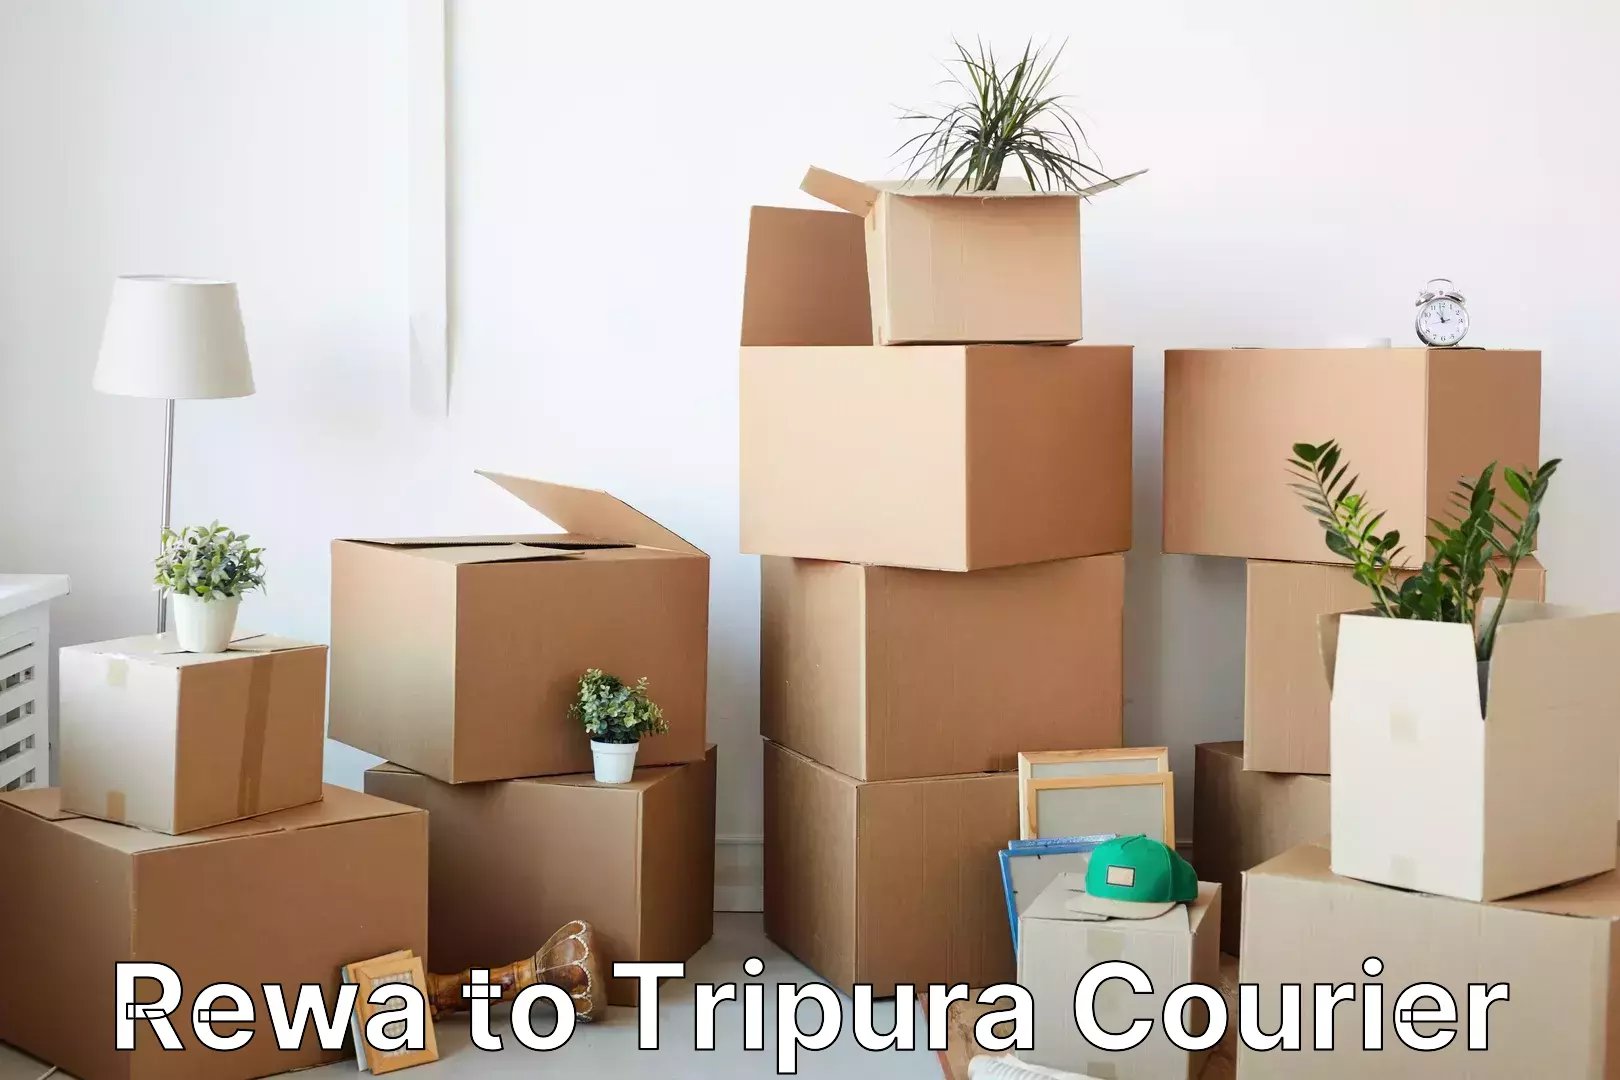 Urgent luggage shipment in Rewa to Tripura